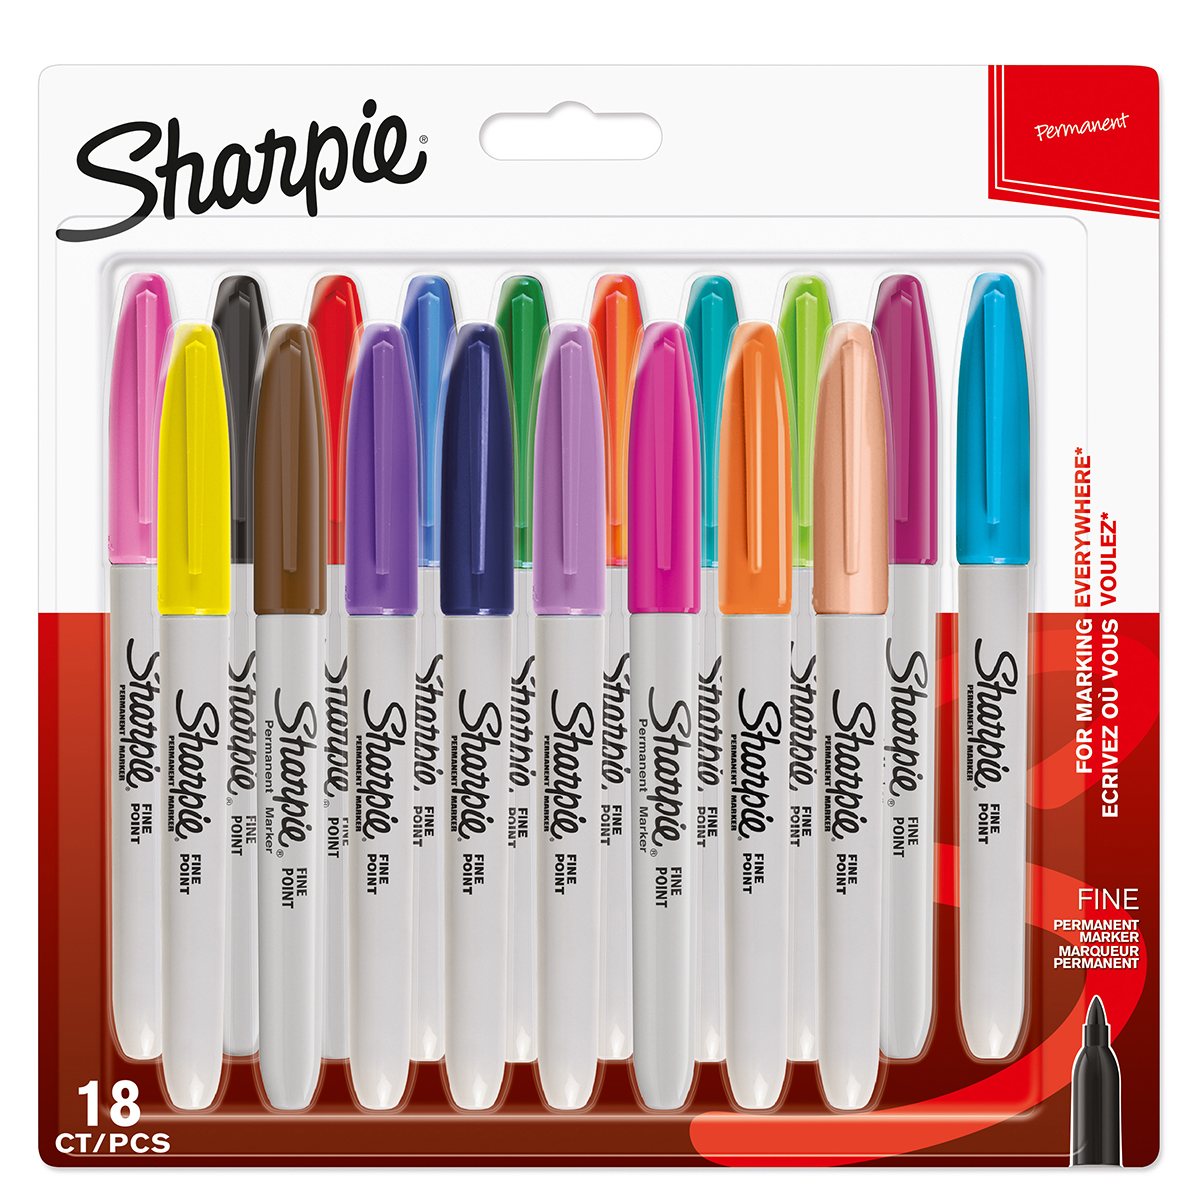 Sharpie Brush Tip Permanent Marker Sets